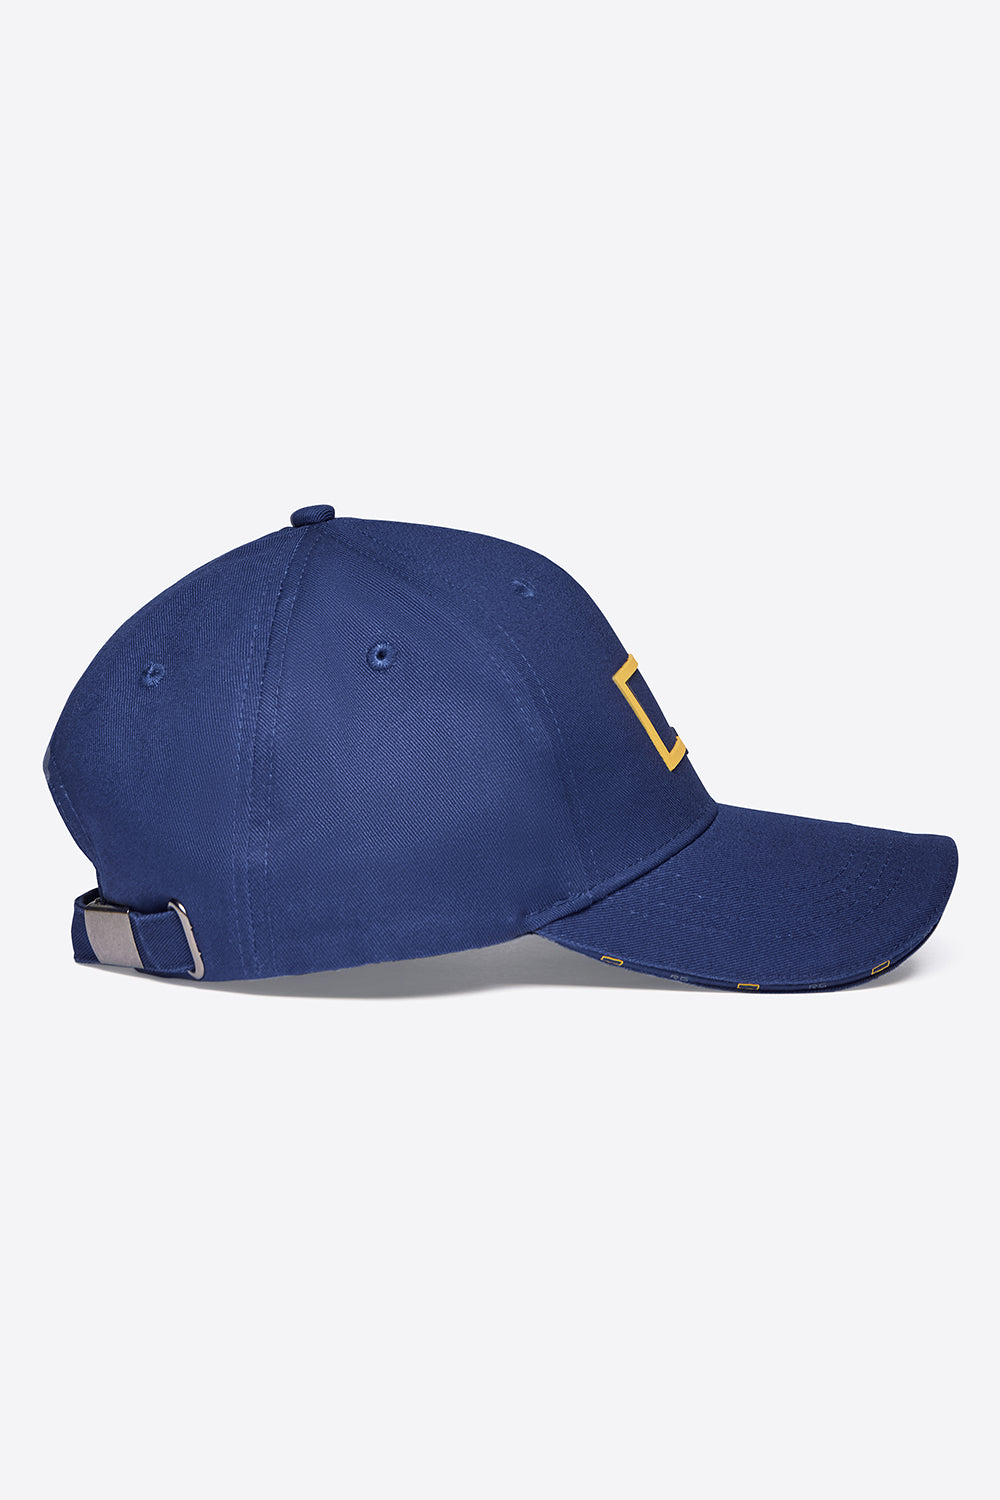 RG Print Baseball cap Navy